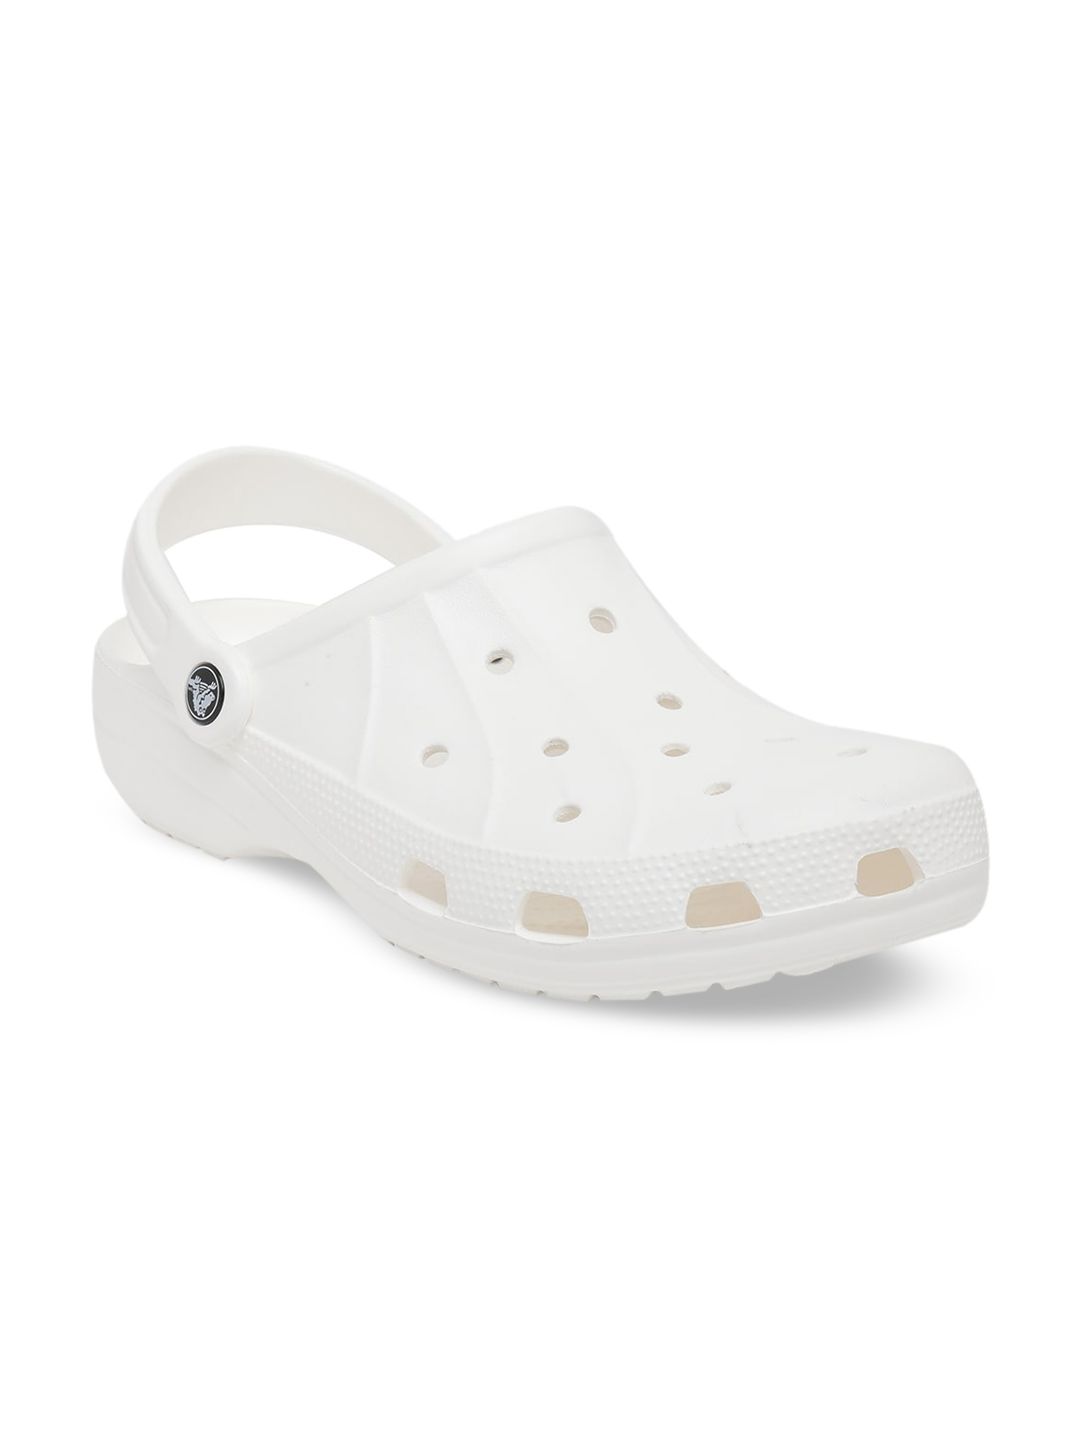 Crocs Ralen  Unisex White Sandals Price in India